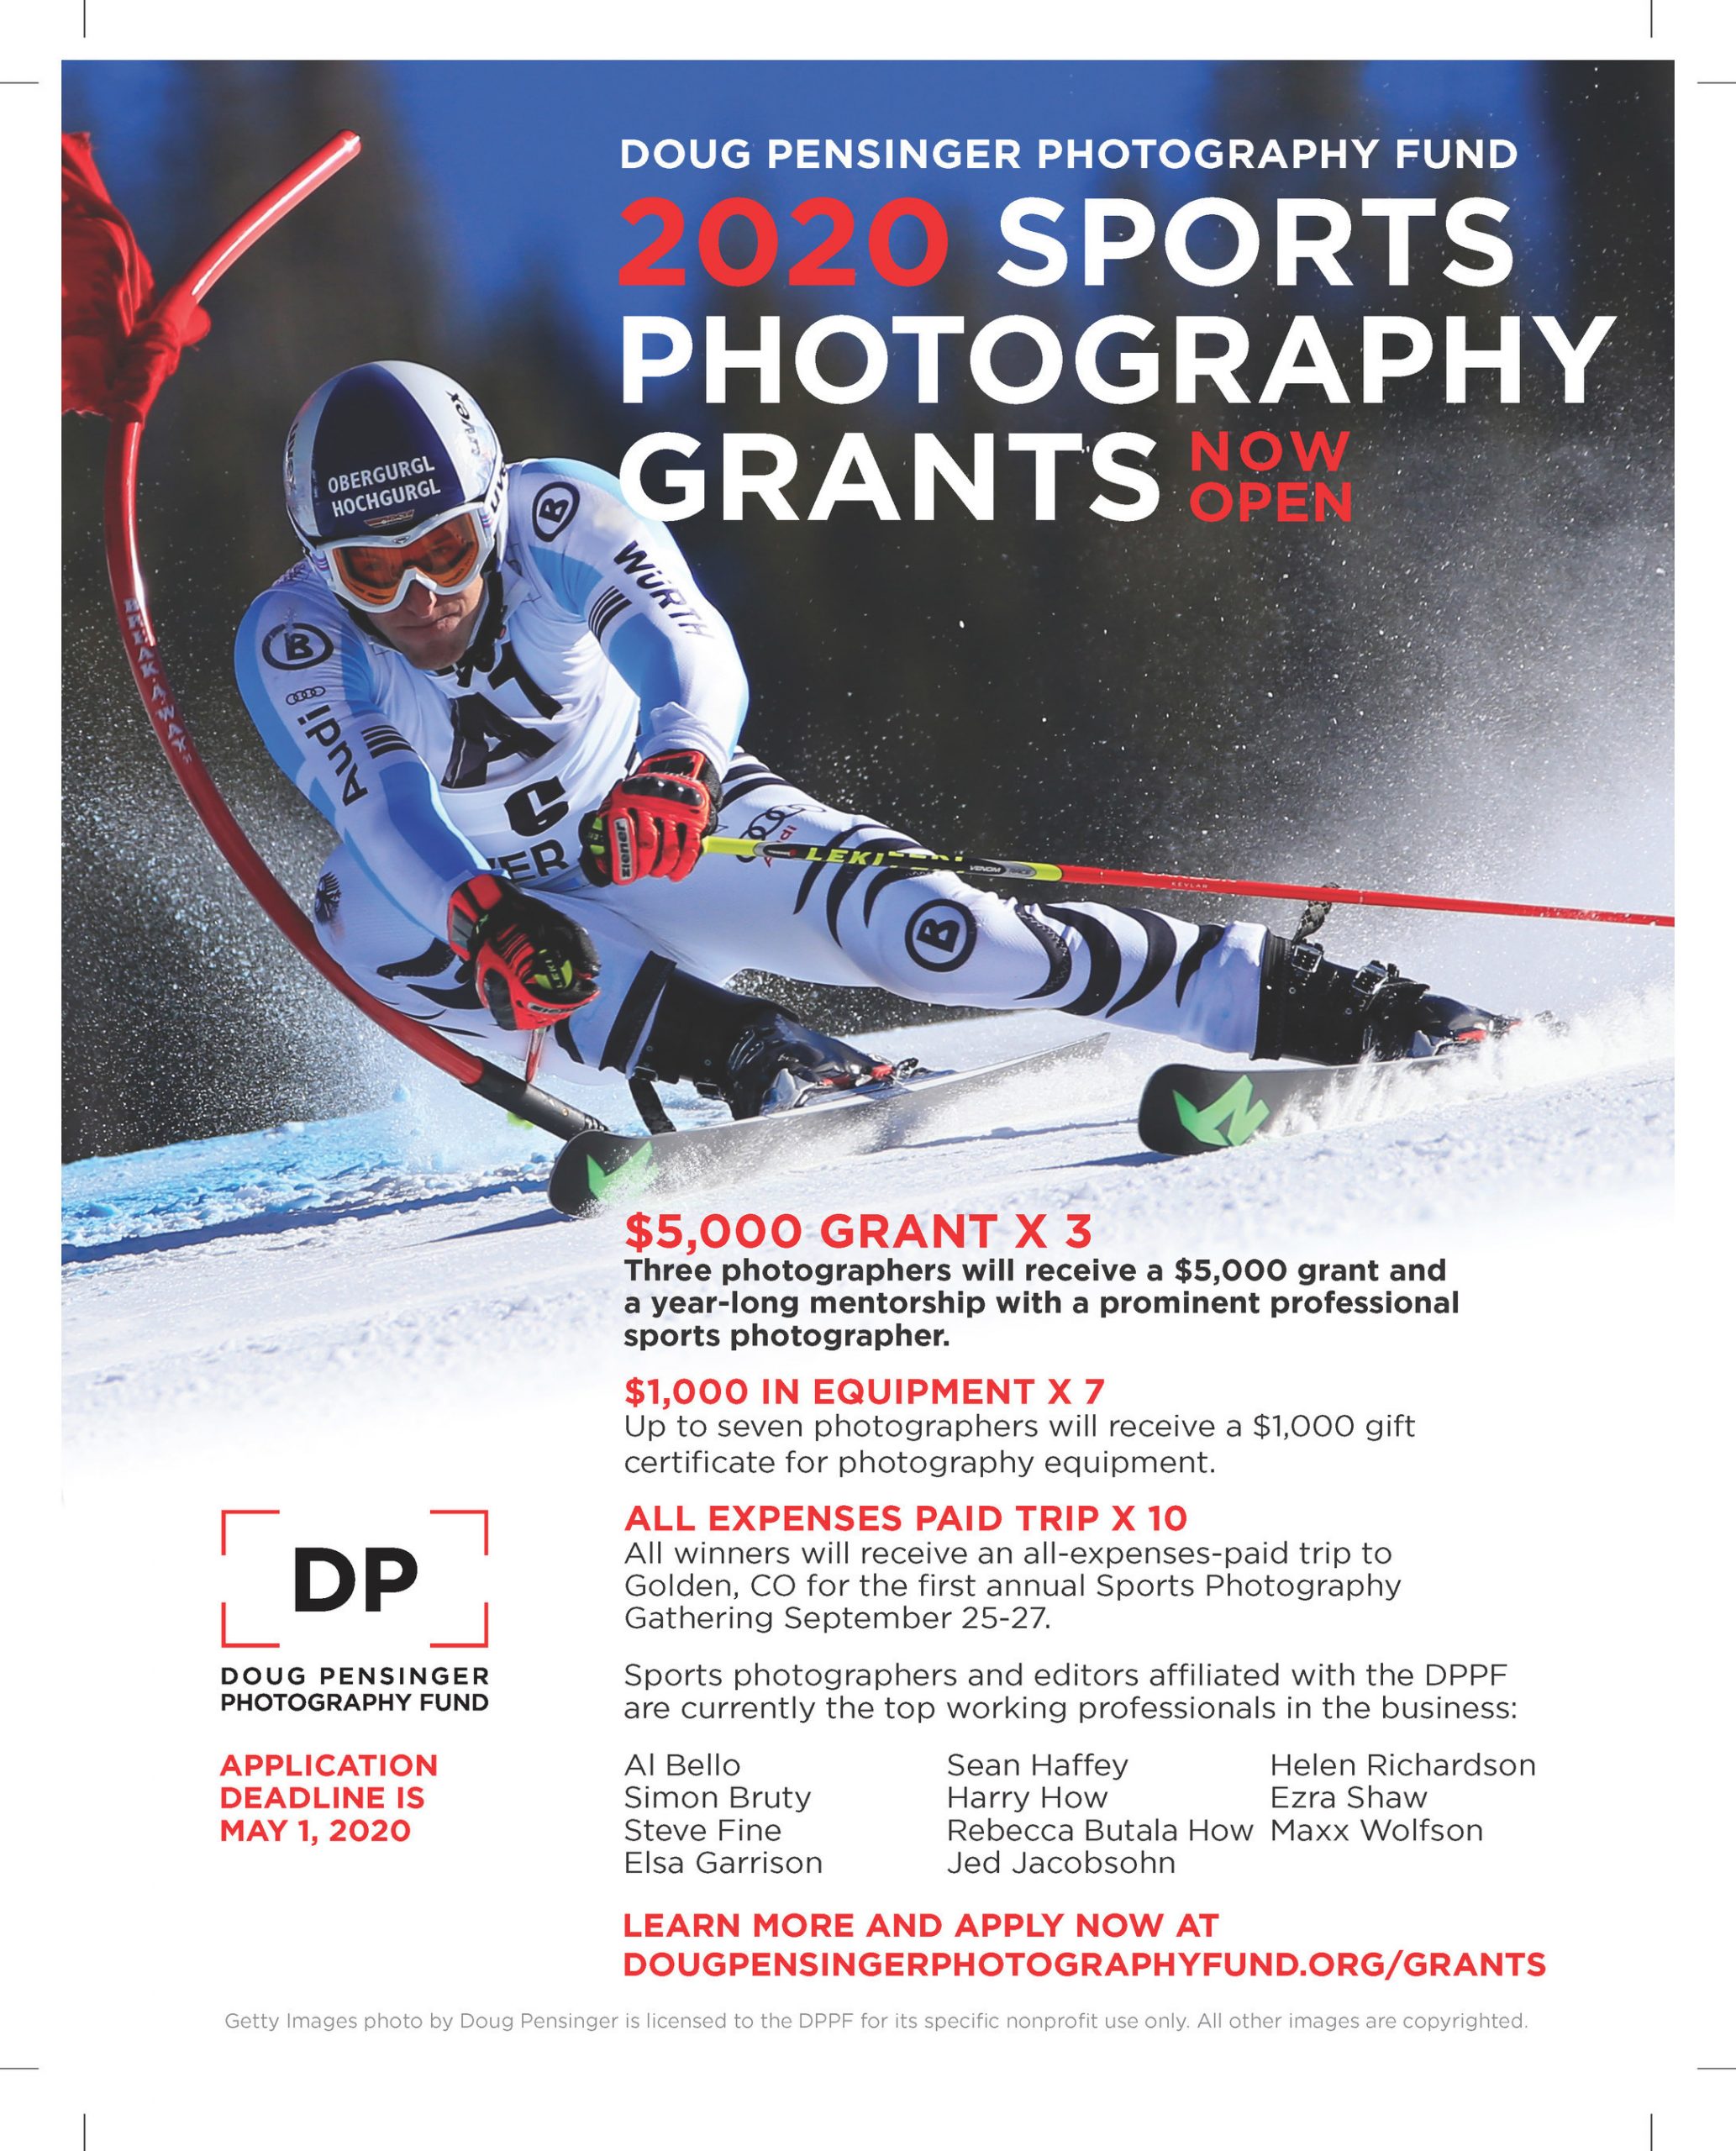 DPPF 2020 Sports Photography Grants & Mentorships